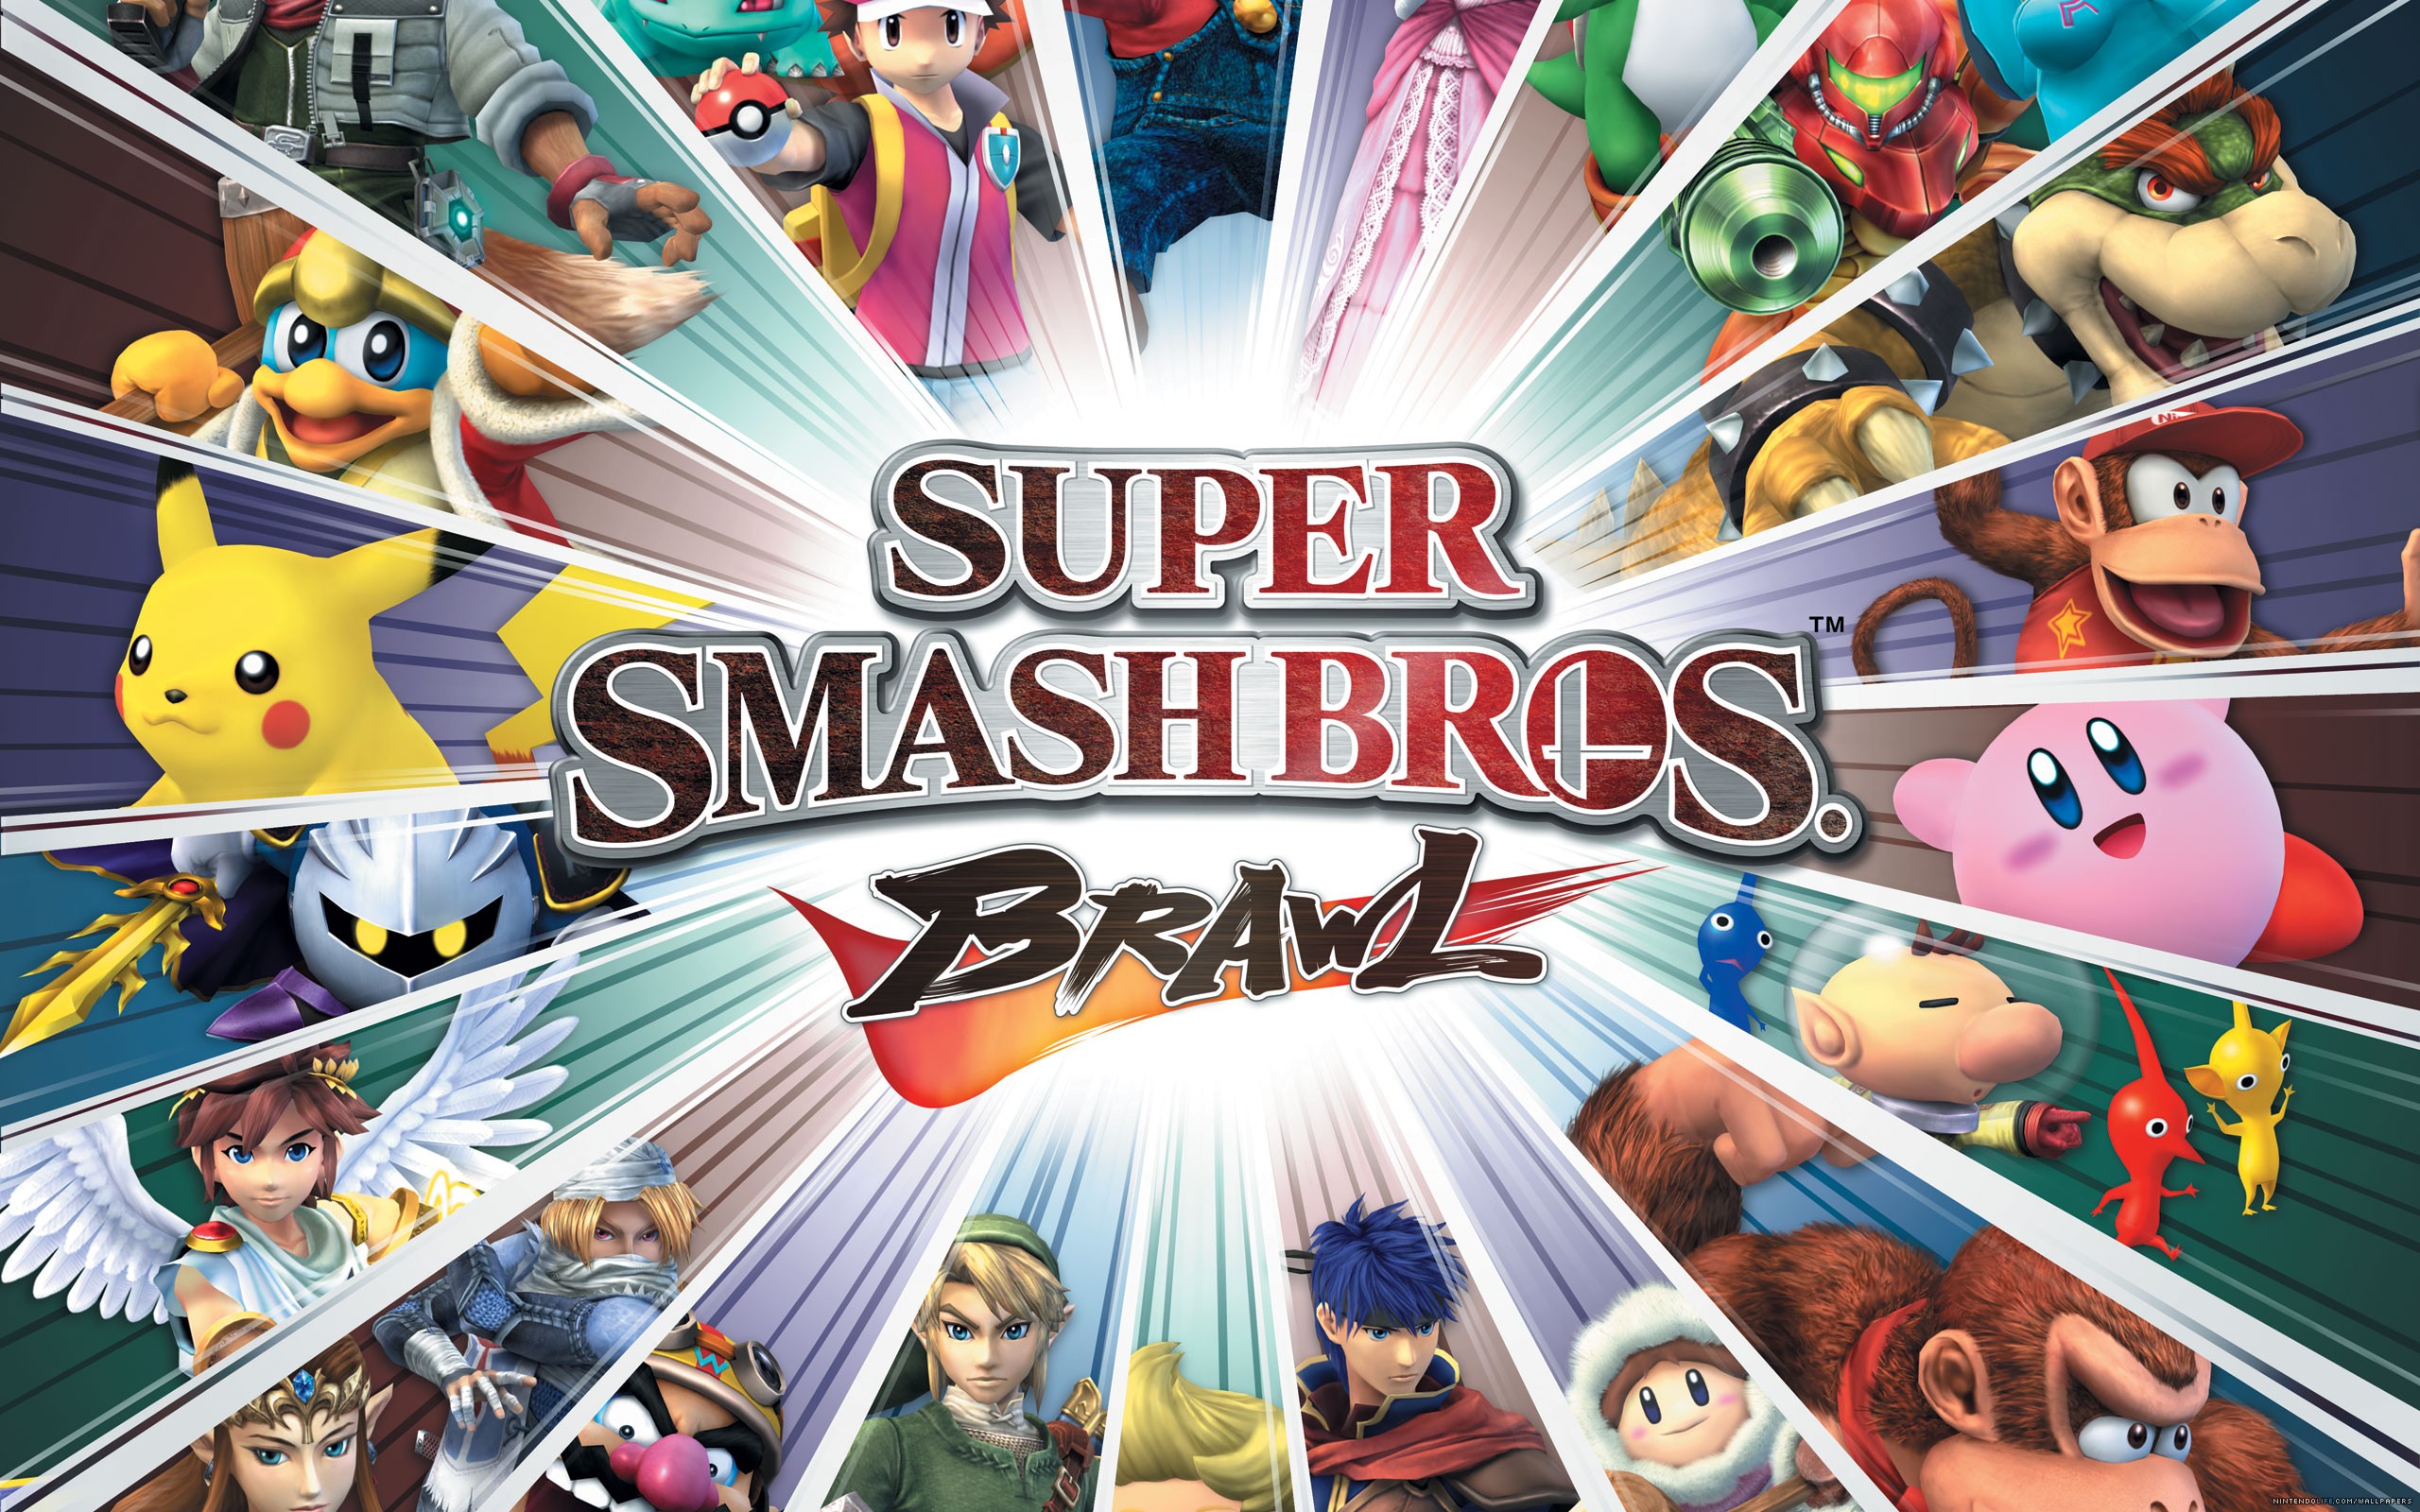 Super smash bros игра. Супер смэш БРОС 64. Super Smash Bros. (1999). Super Smash Bros Brawl Wii.